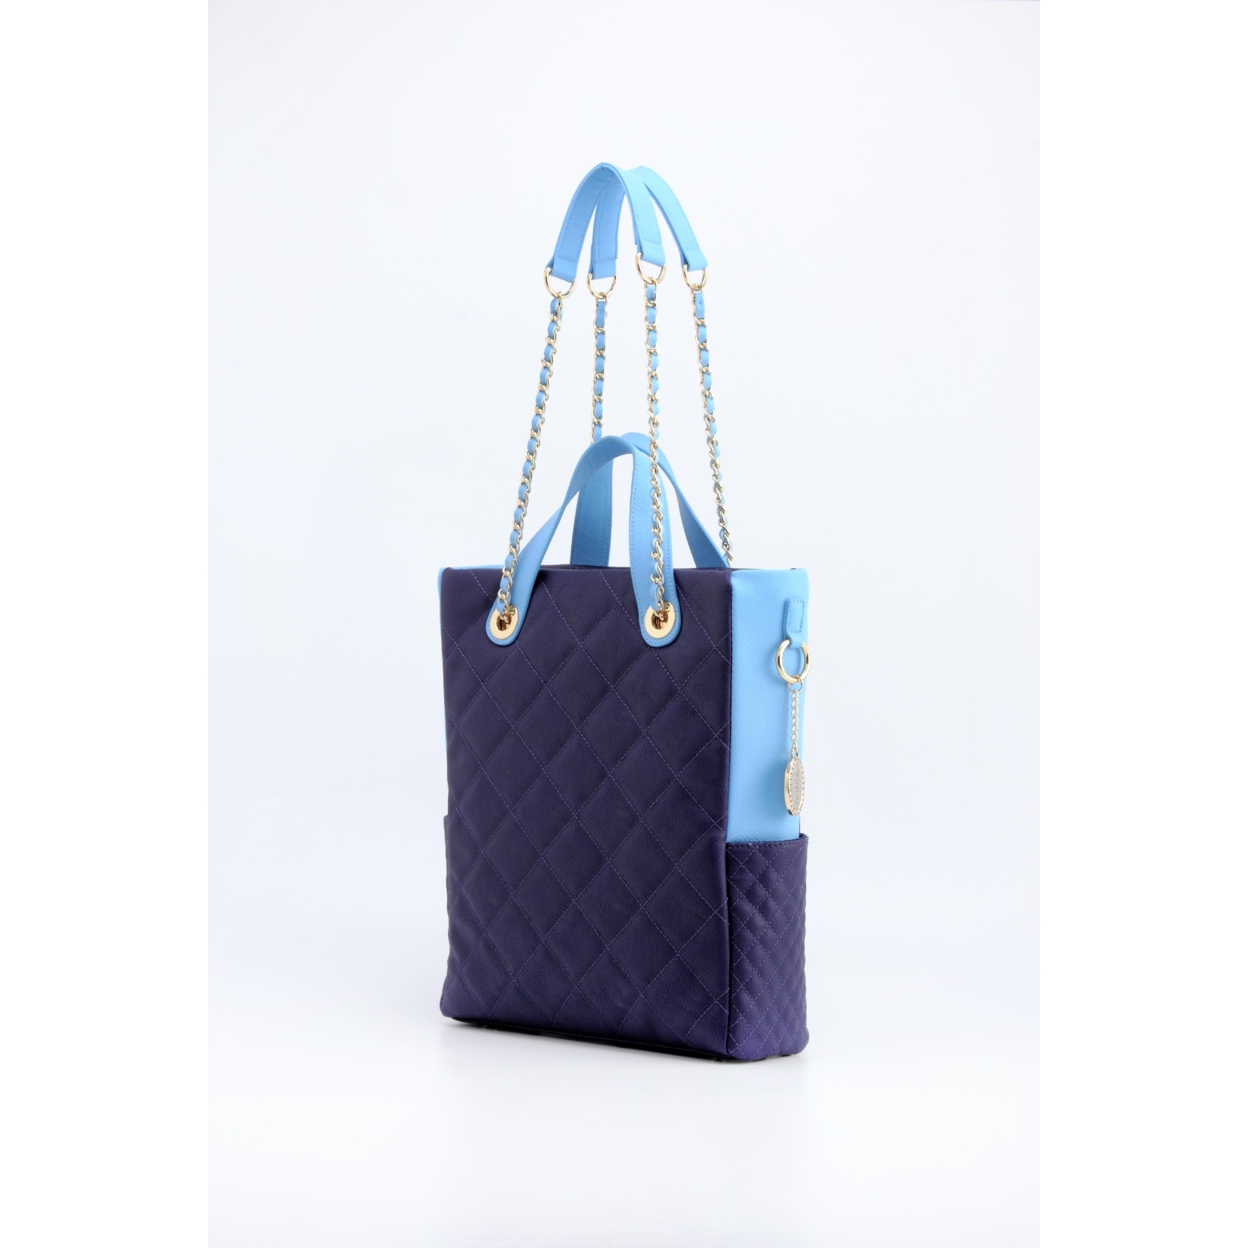 SCORE!'s Kat Travel Tote For Business, Work, Or School Quilted Shoulder Bag- Navy Dark Blue And Light Blue